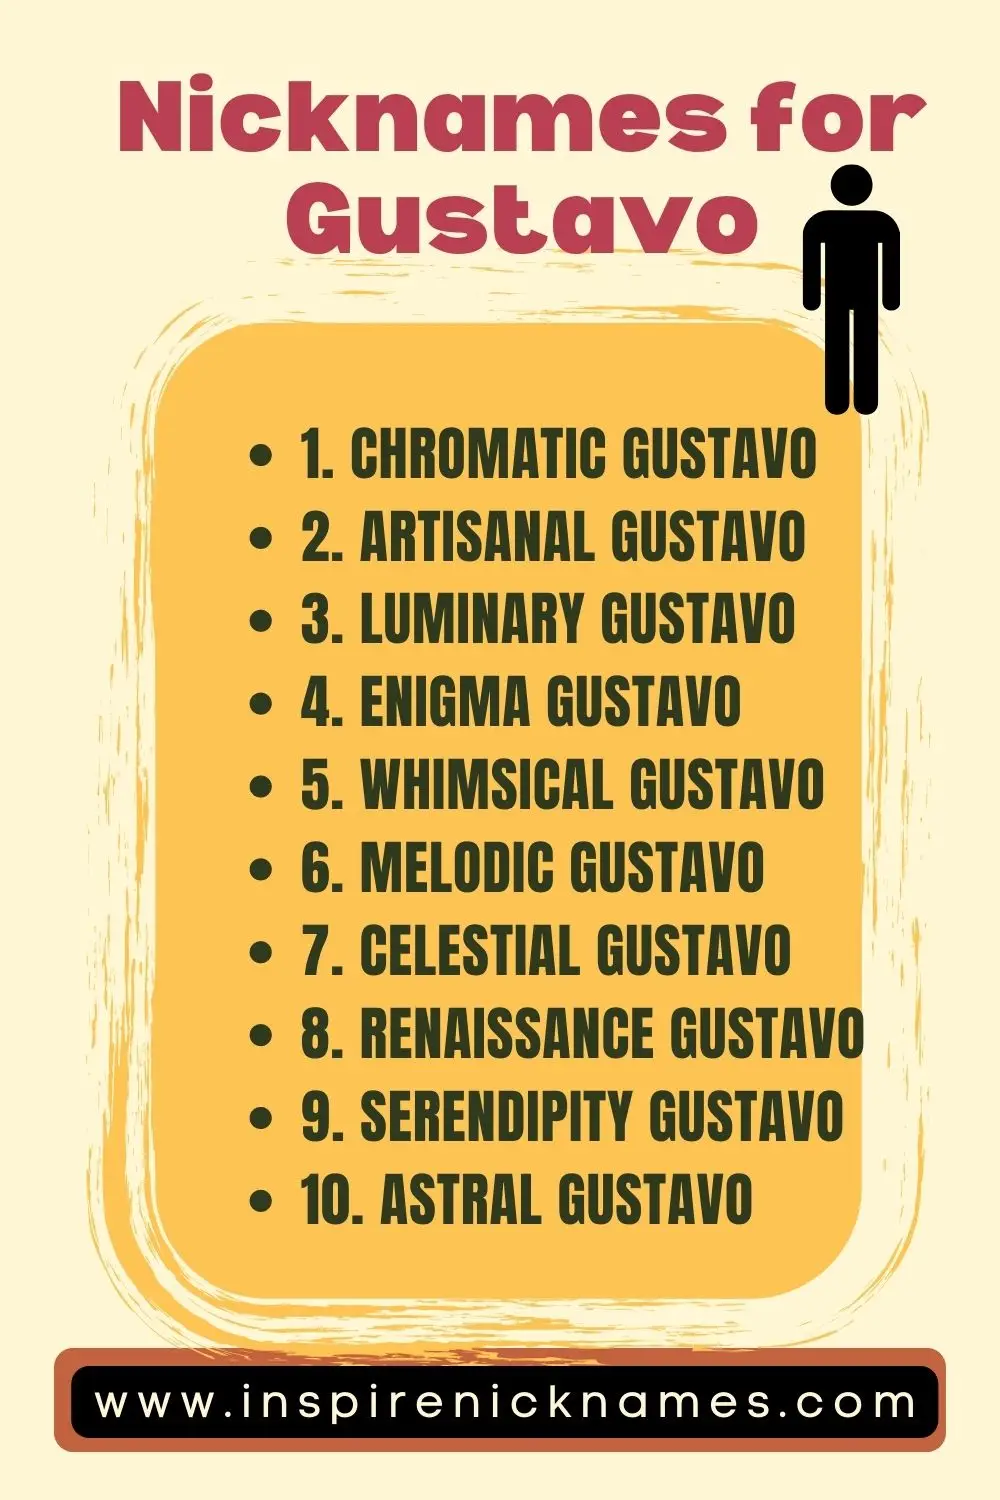 nicknames for Gustavo list ideas